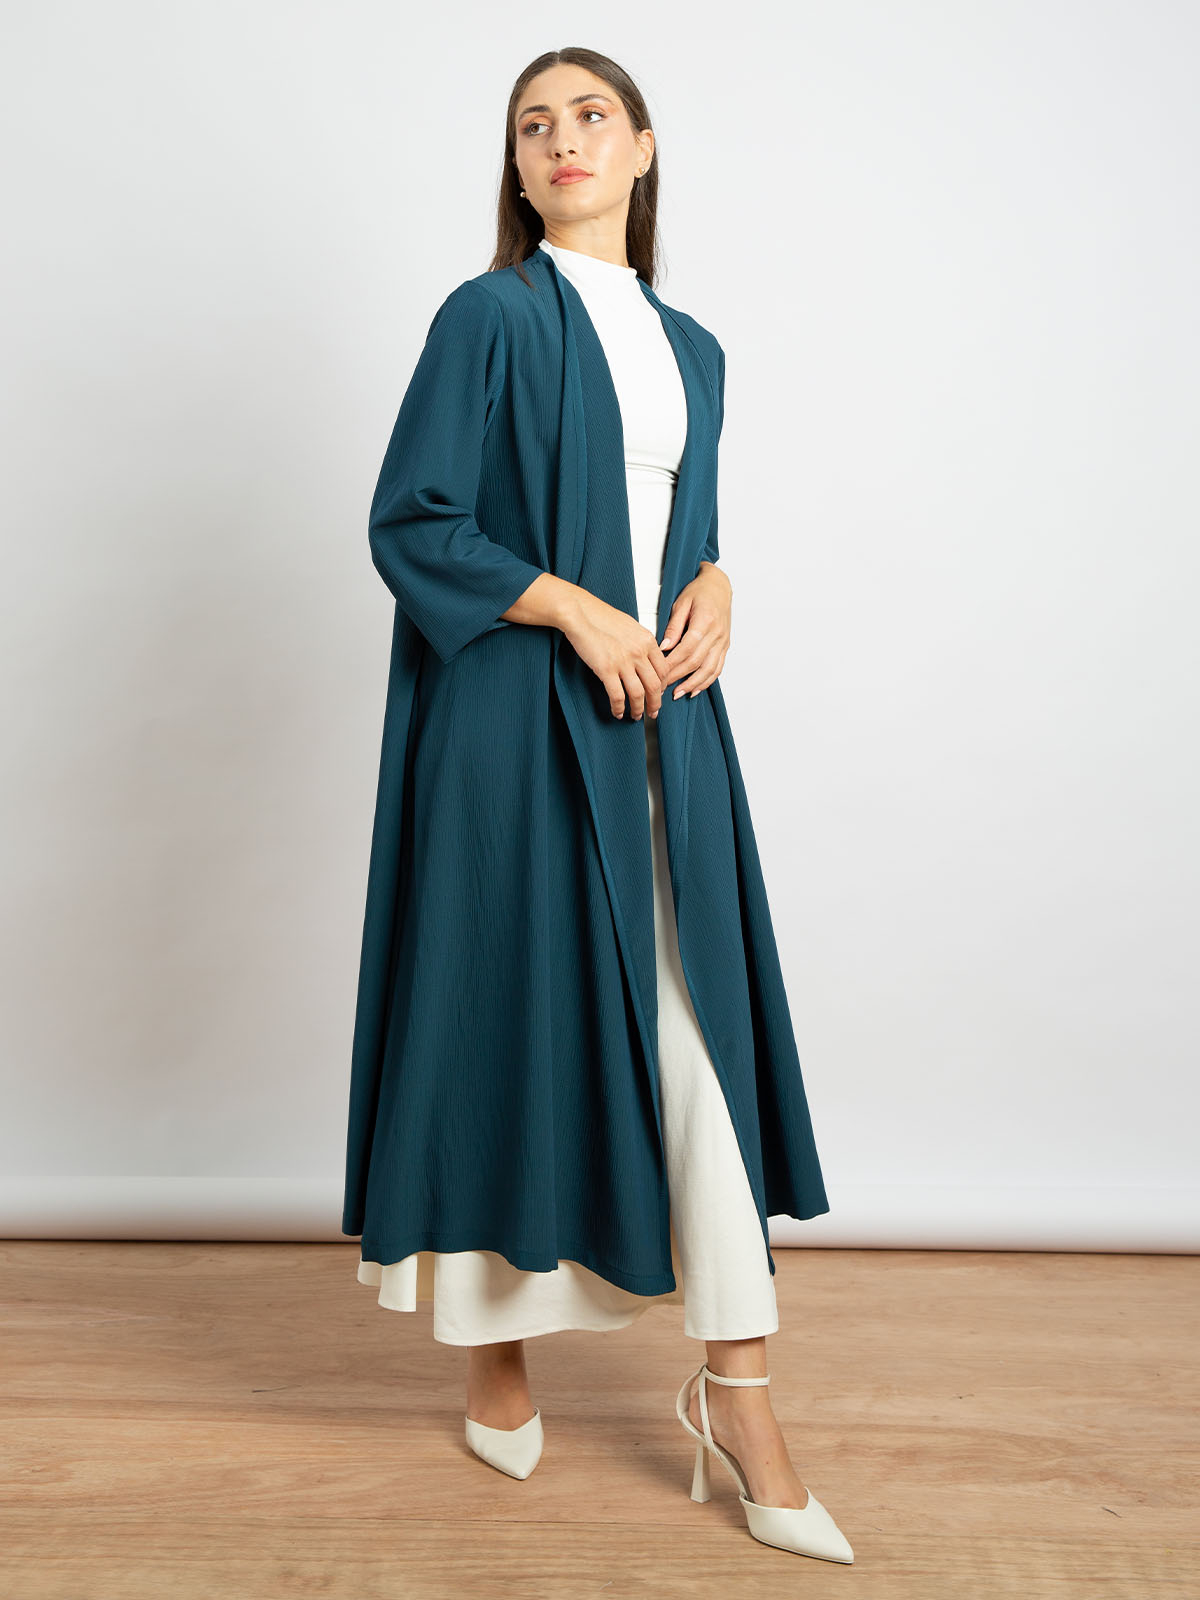 Kaafmeem women clothing regular fit plain teal blue color open midi abaya in fancy yoryu fabric